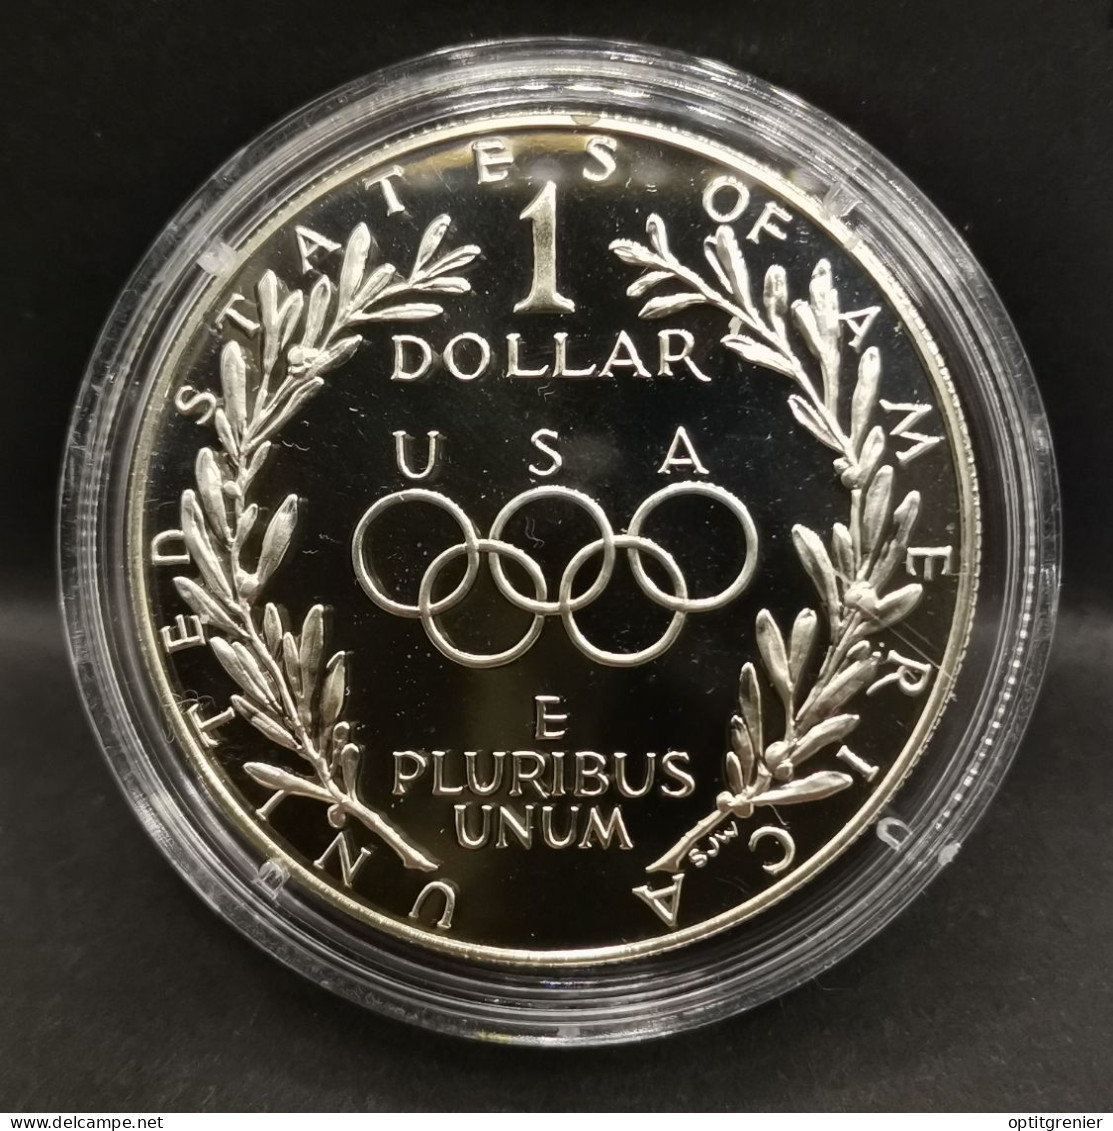 1 DOLLAR BE ARGENT 1988 S OLYMPIADES JO USA / PROOF SILVER - Non Classificati